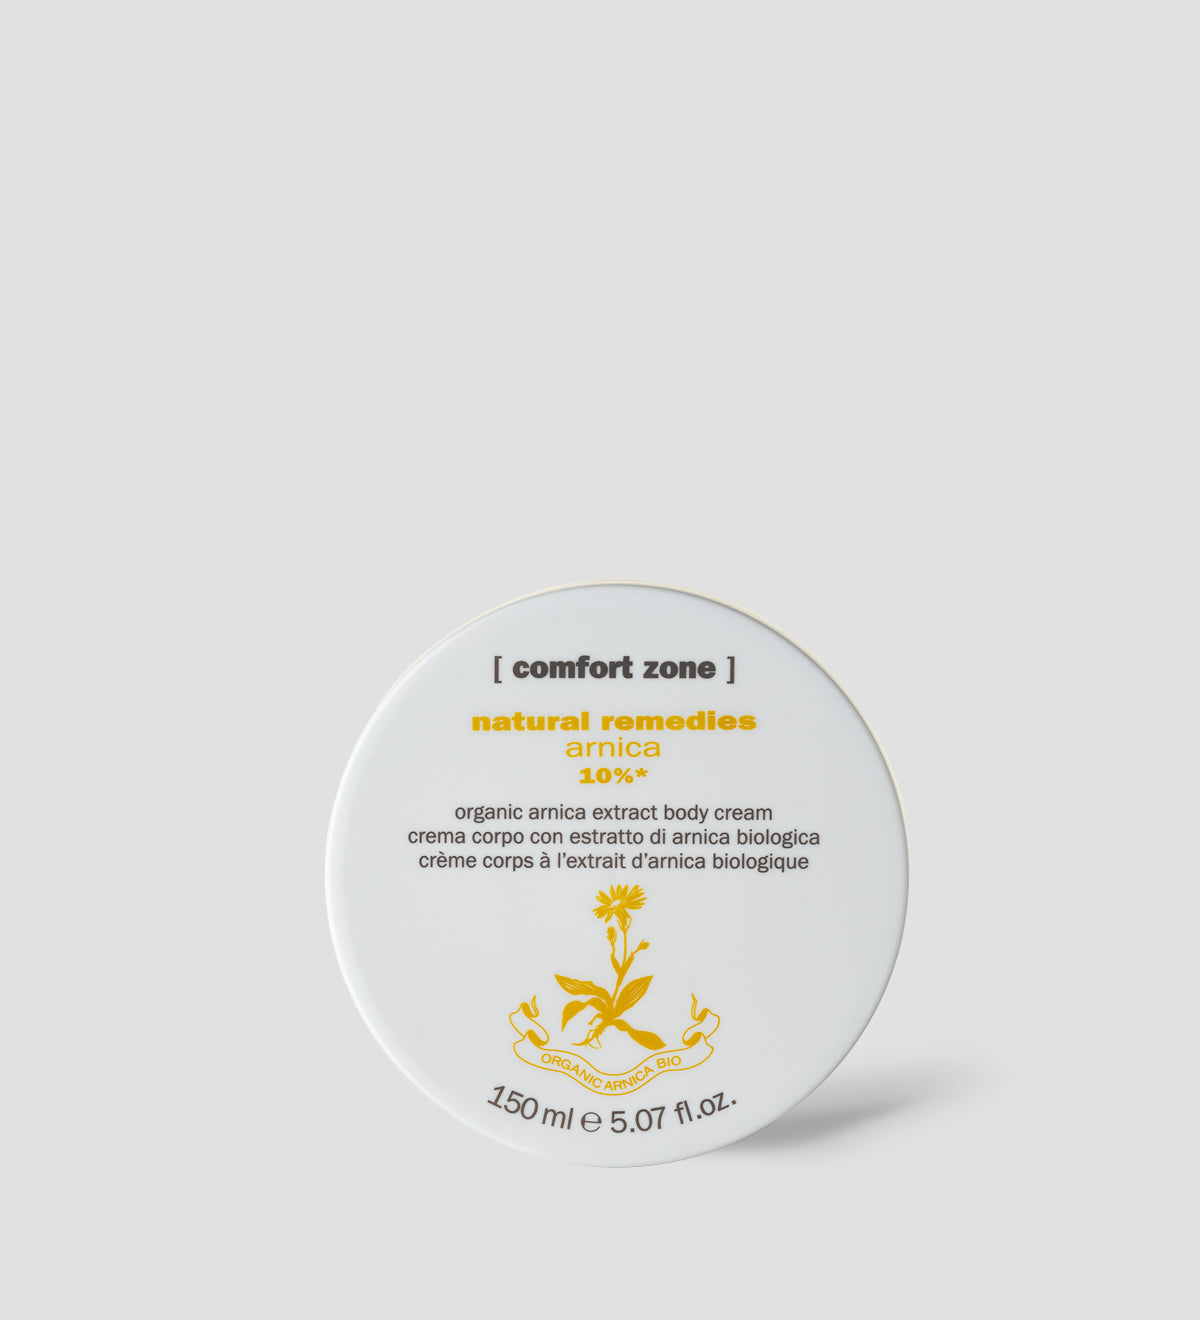 Comfort Zone: NATURAL REMEDIES ARNICA 10% Organic arnica extract body treatment cream-